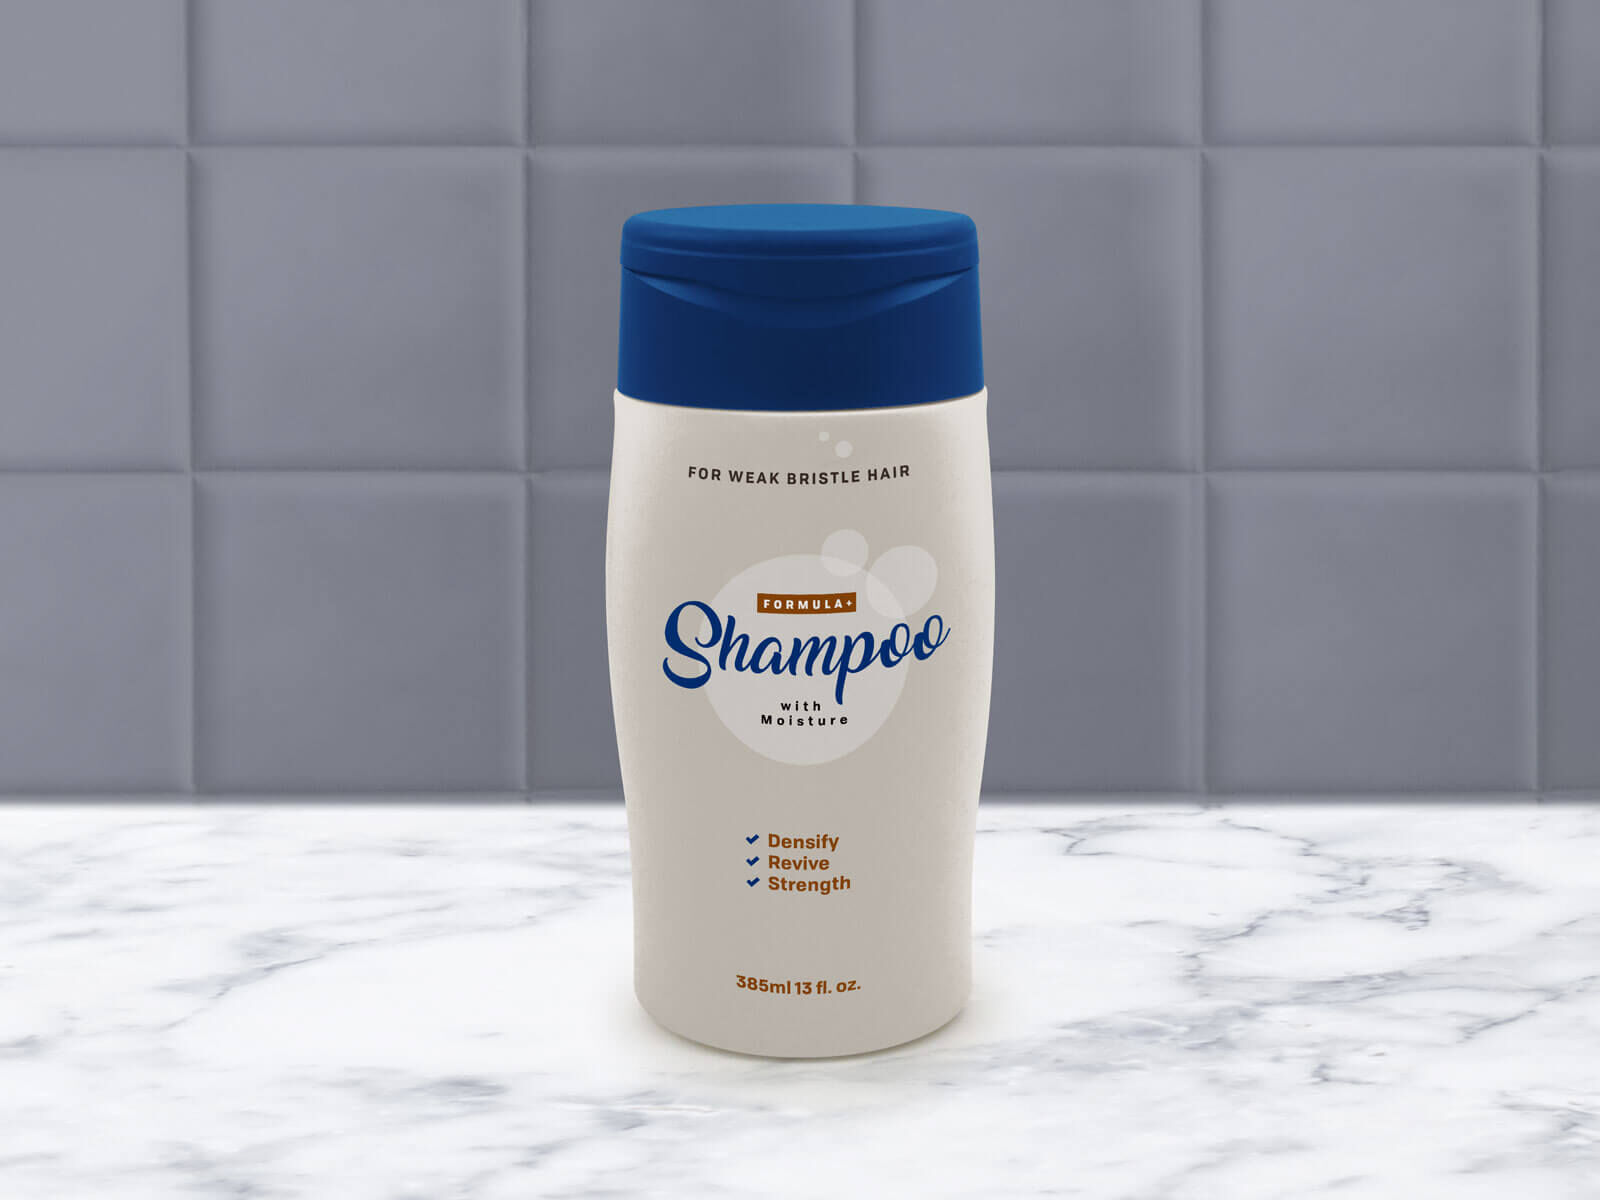 Plastic Shampoo Bottle in Bathroom Mockup FREE PSD